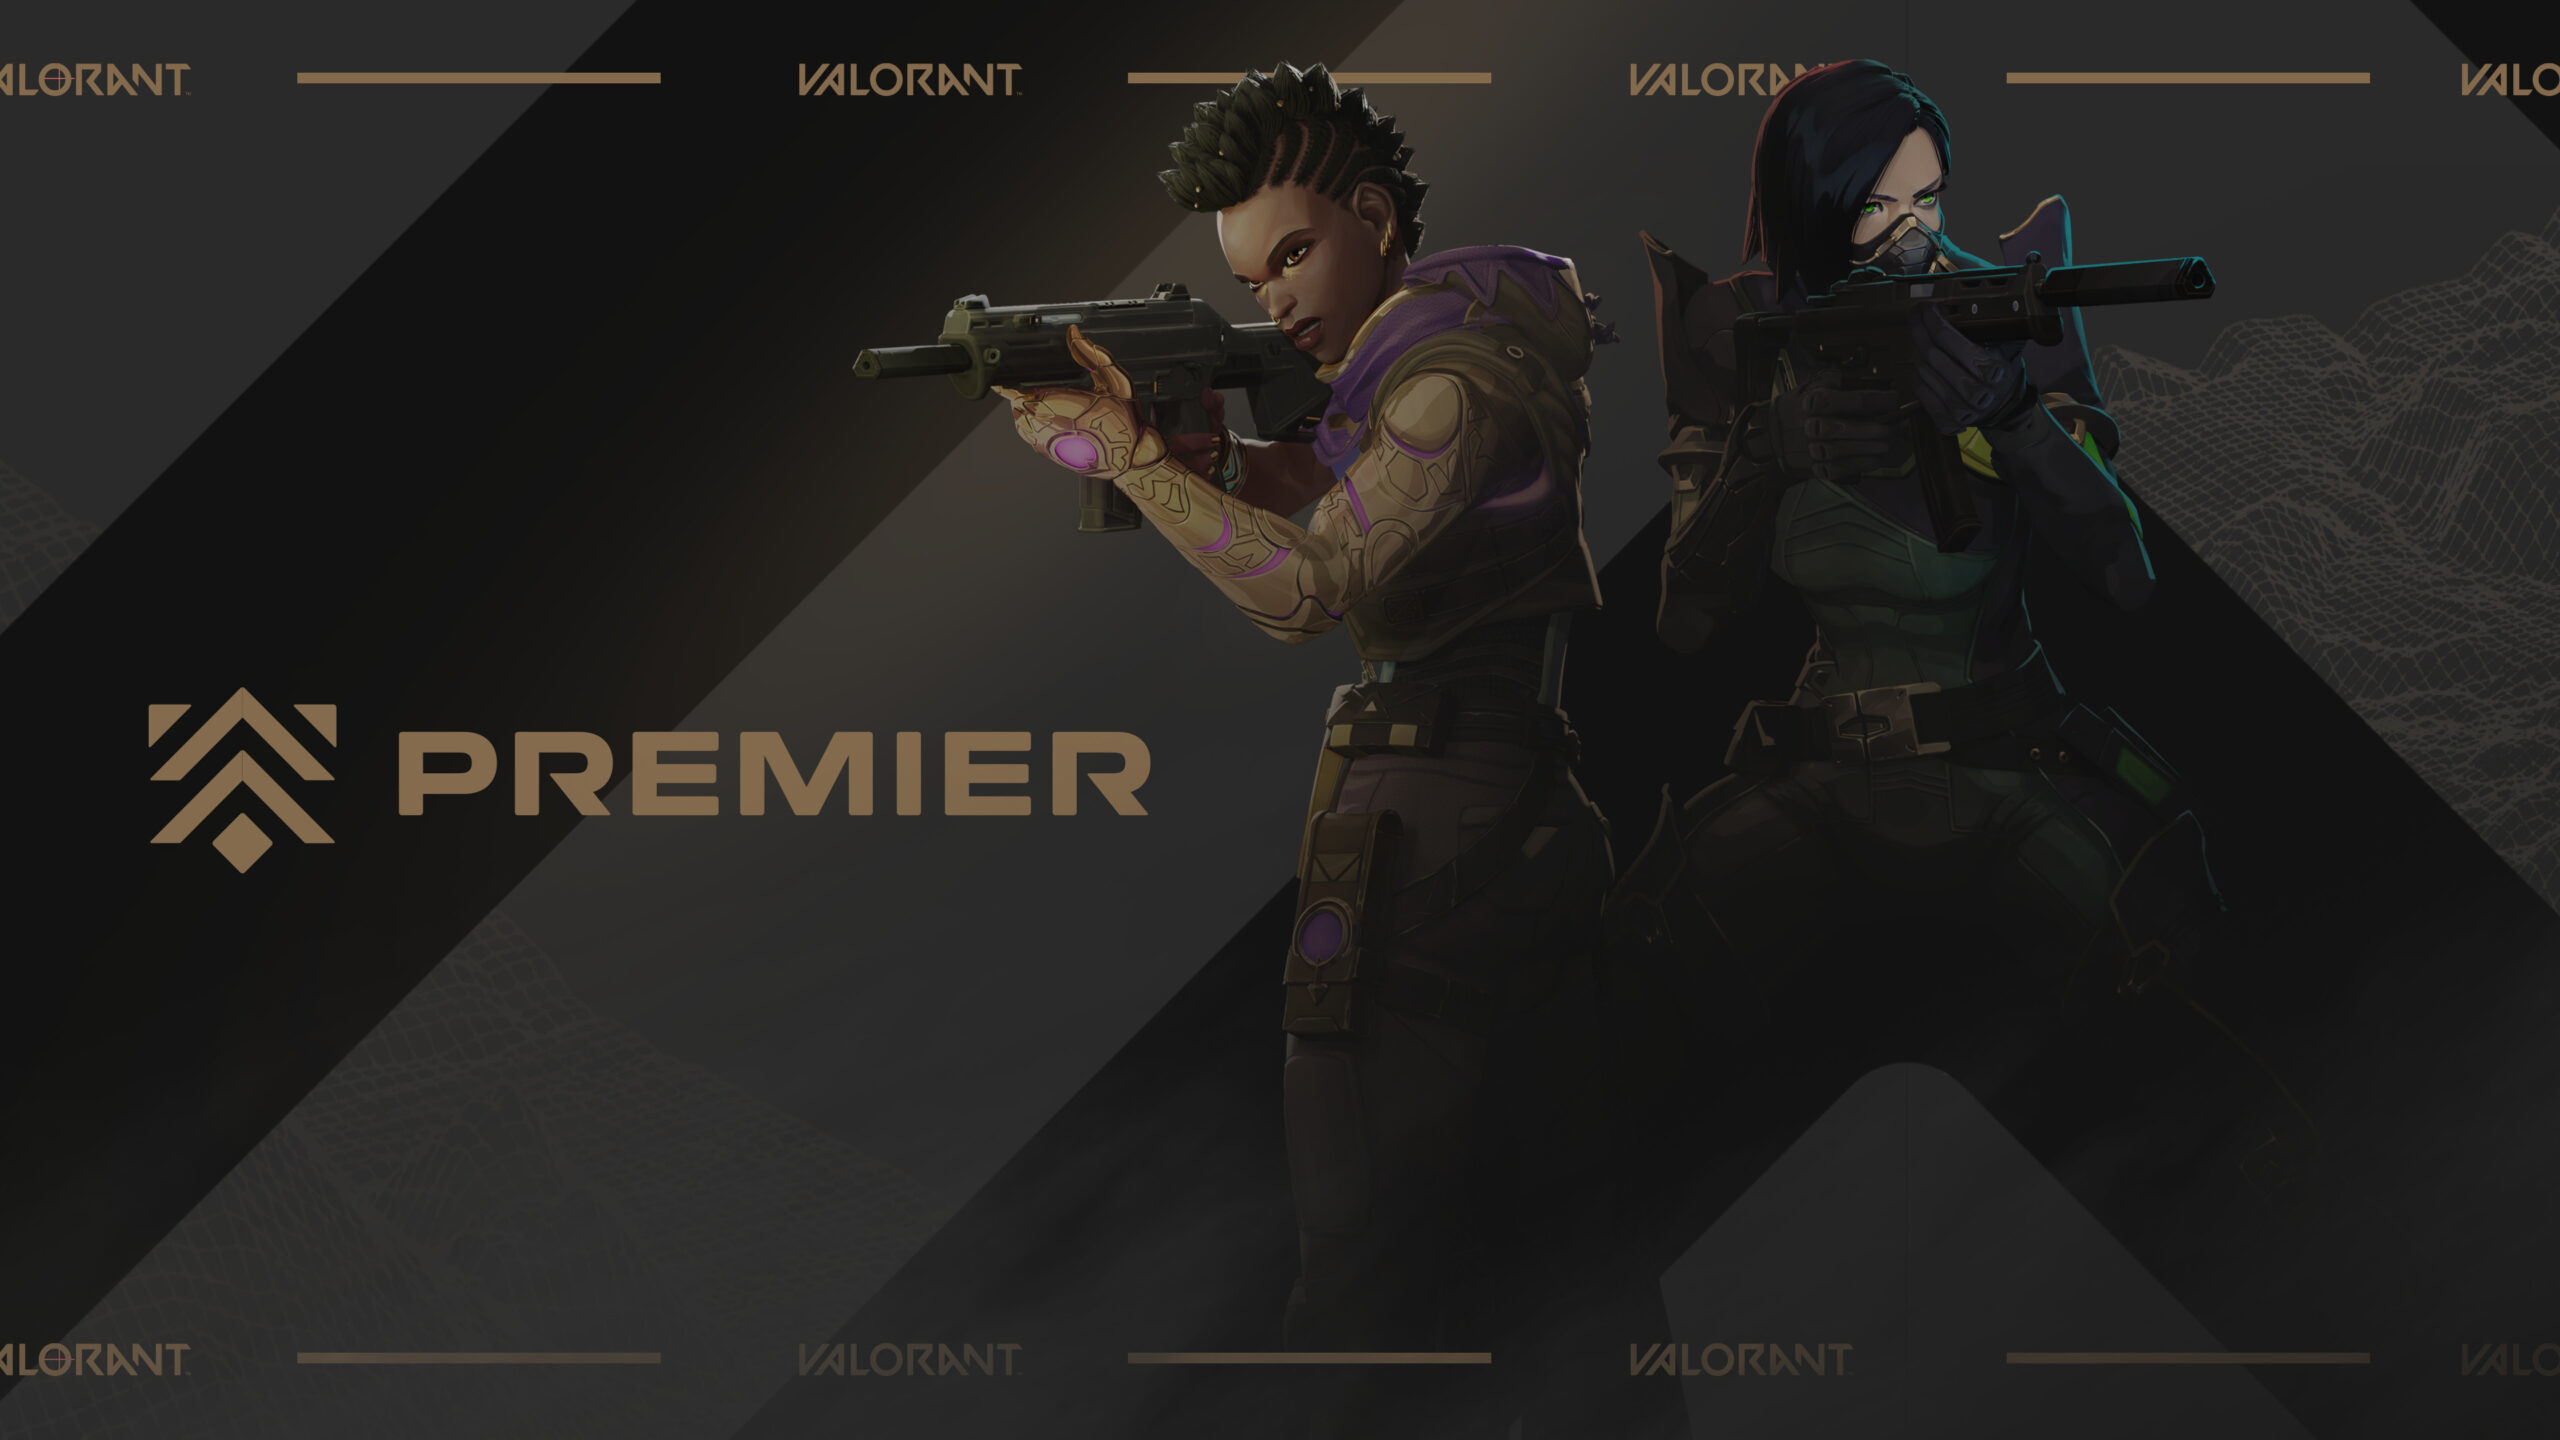 Riot reveals Valorant Premier competitive system beta